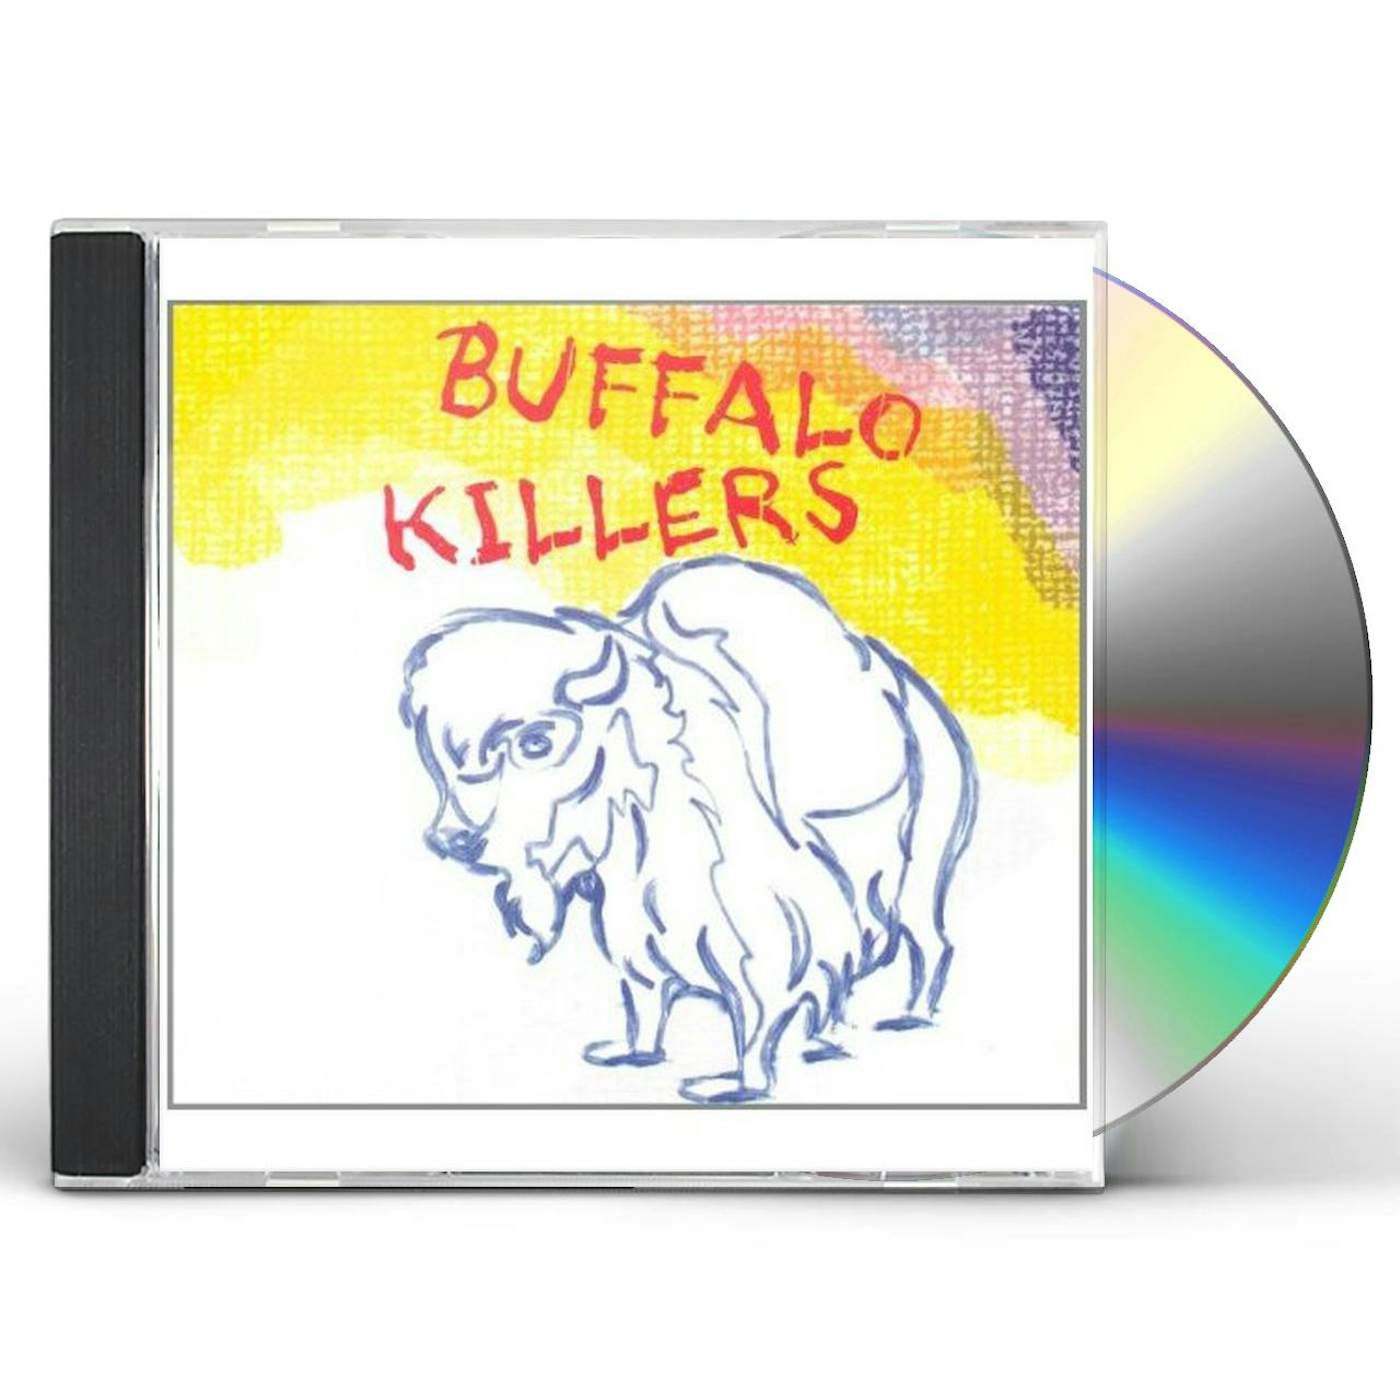 BUFFALO KILLERS CD